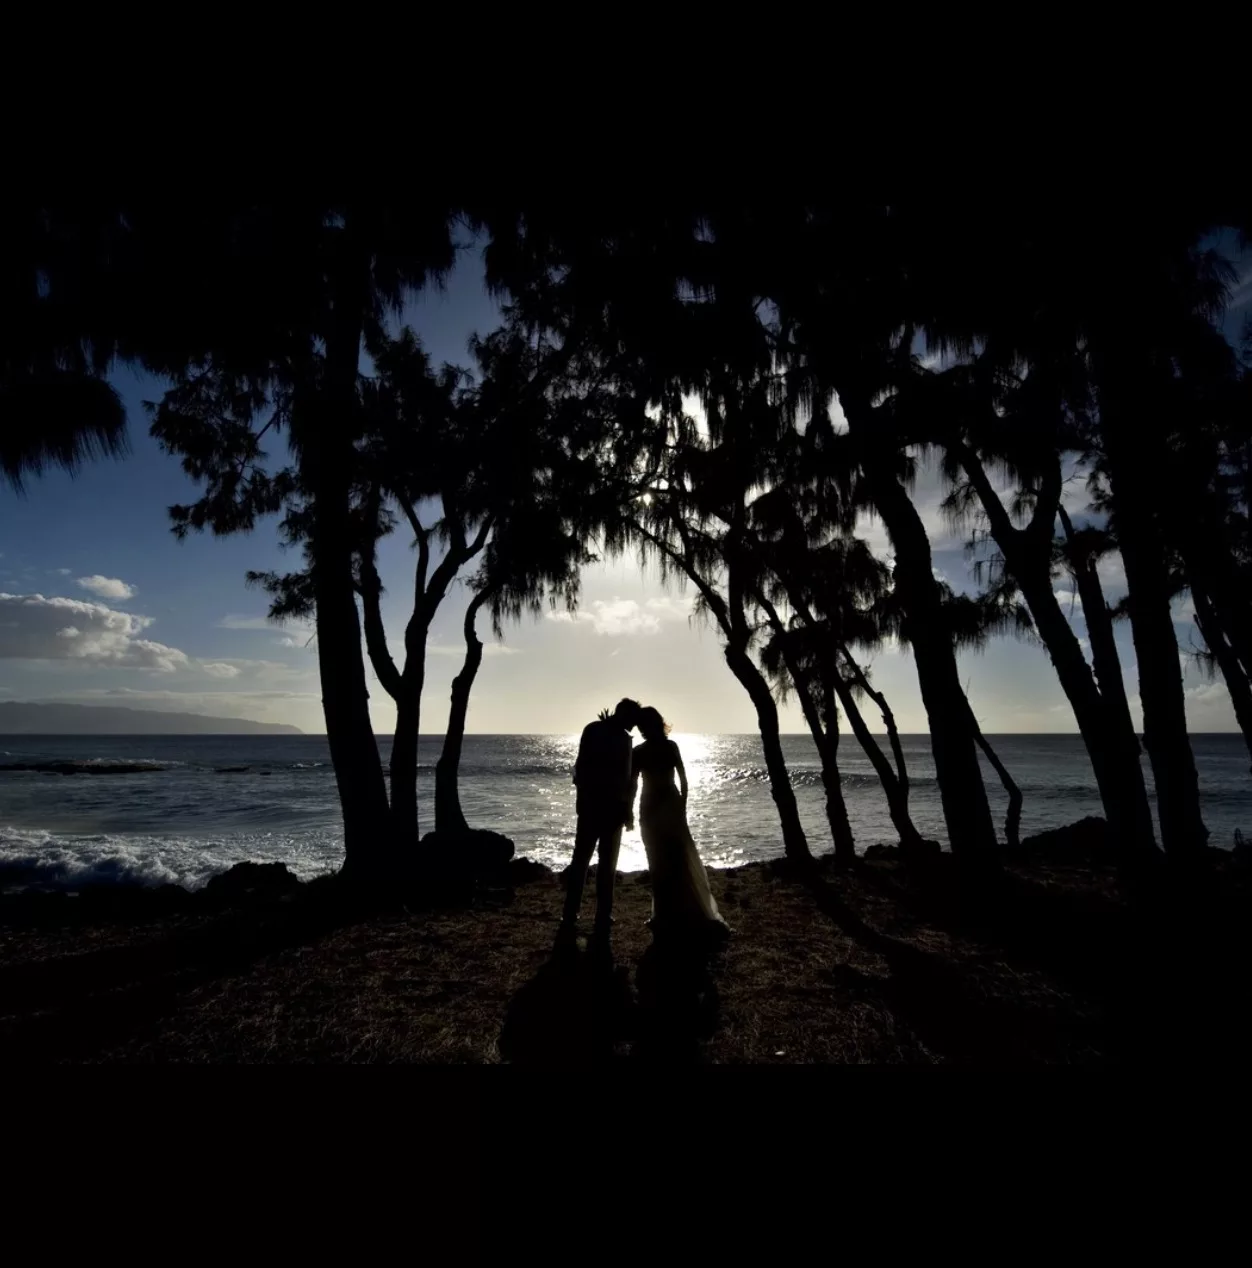 A perfect sunset beach side couple photoshoot captured by oahu hawaii photographer